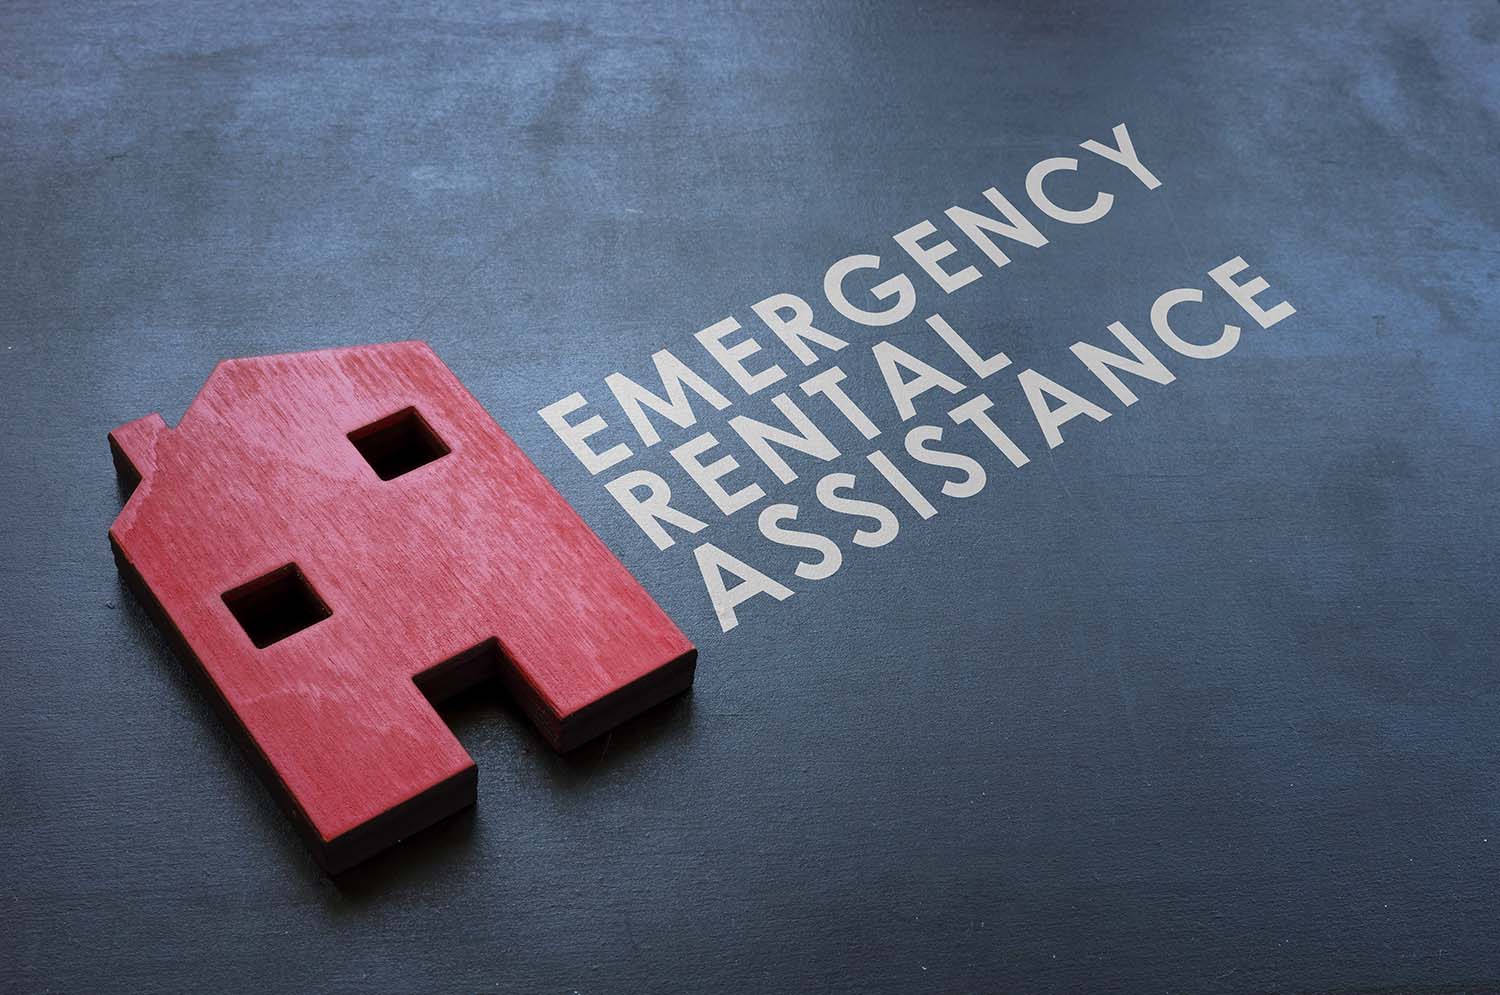 Programa de alquiler de emergencia ¿eres elegible?